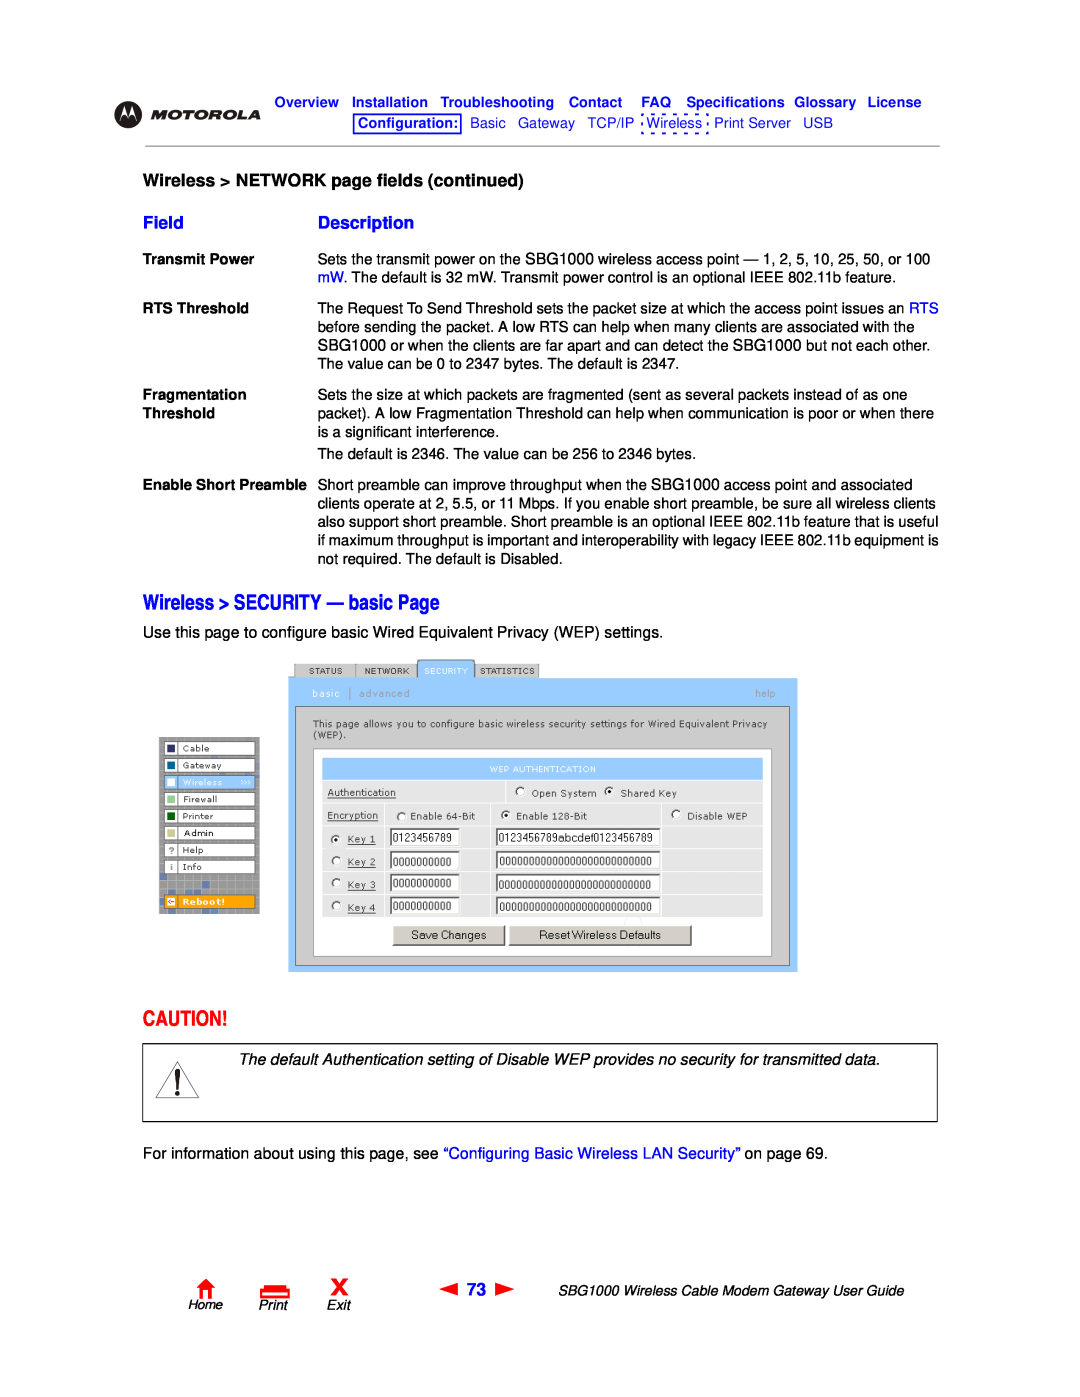 Motorola SBG1000 manual Wireless SECURITY - basic Page, Wireless NETWORK page fields continued, Field, Description 